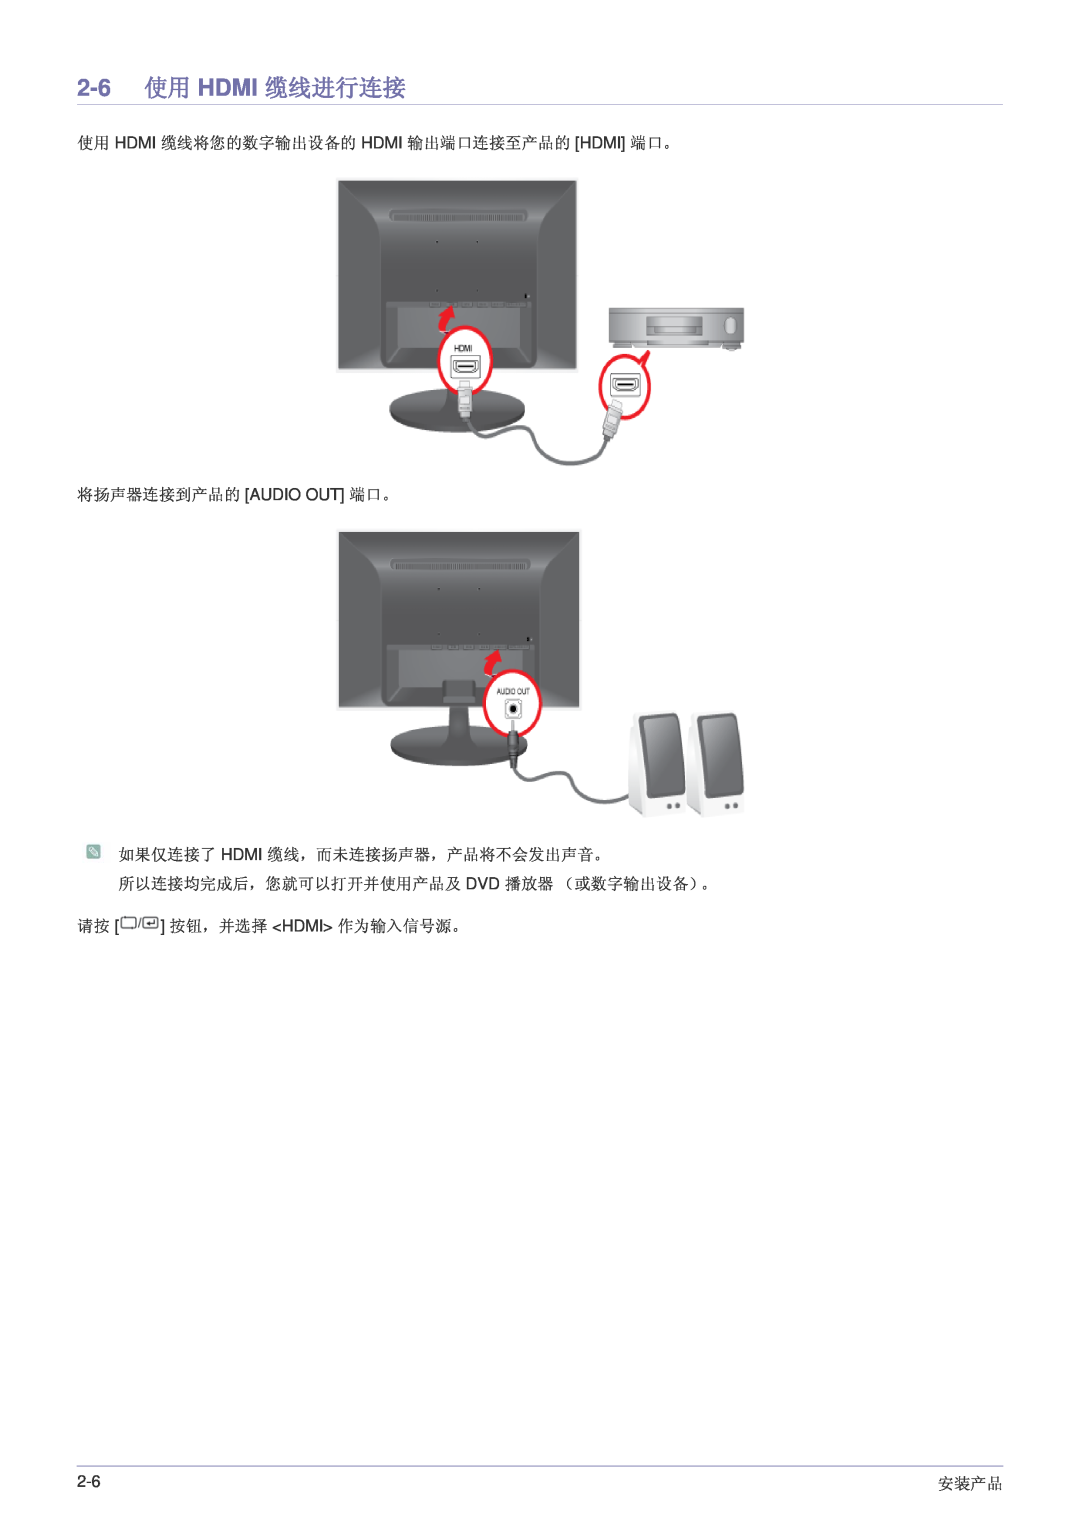 Samsung LS24LRZKUV/EN manual 2-6 使用 HDMI 缆线进行连接, 使用 Hdmi 缆线将您的数字输出设备的 Hdmi 输出端口连接至产品的 Hdmi 端口。, 安装产品 